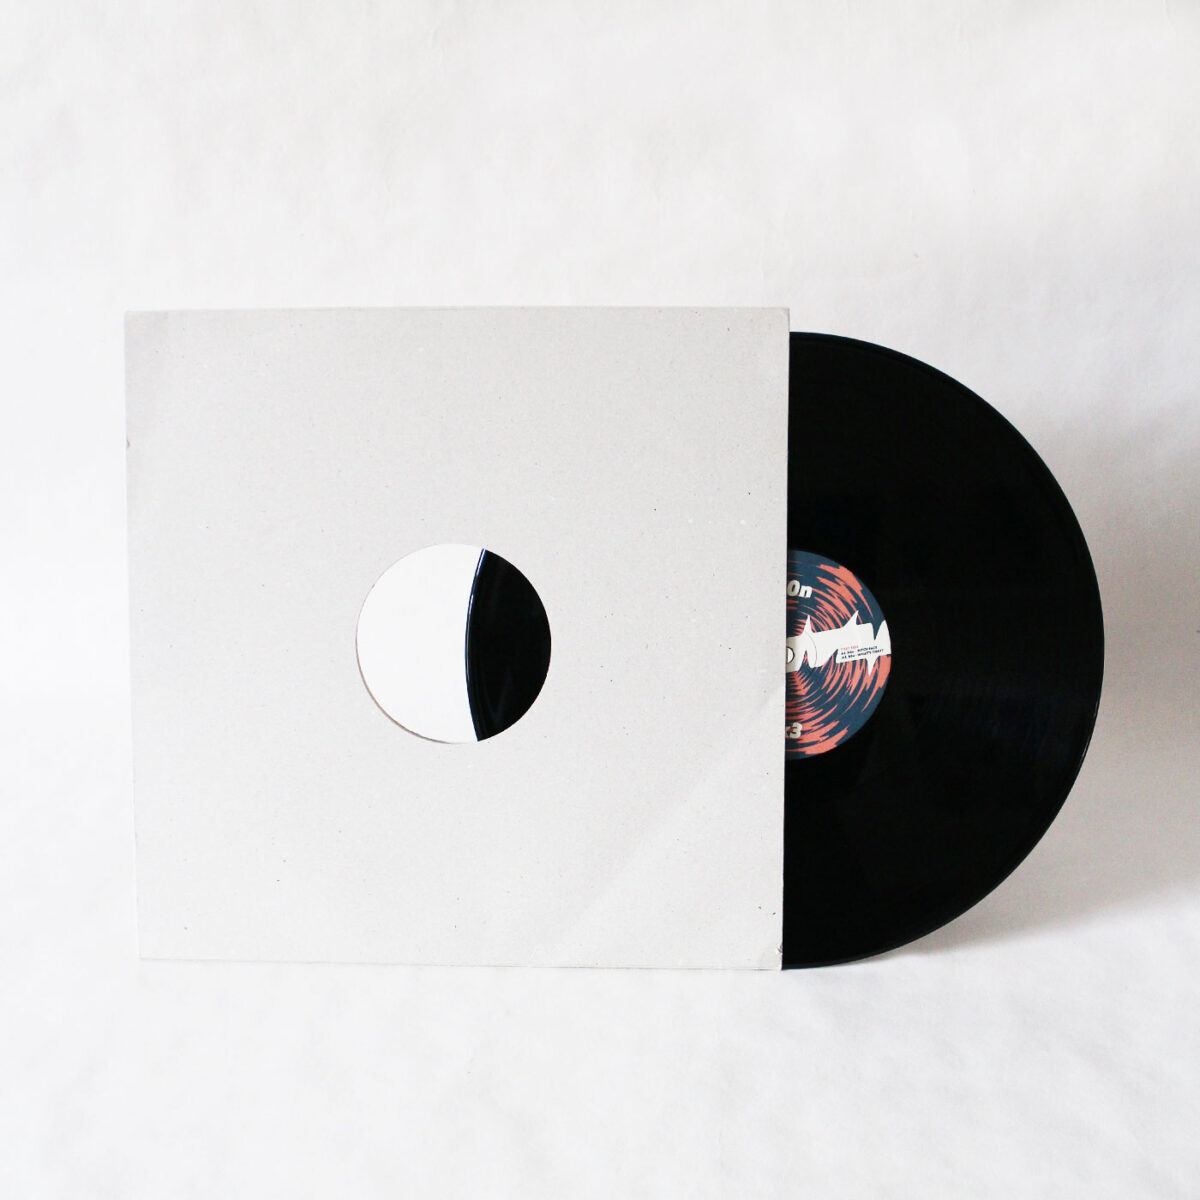 b0n / t3x3 - Subee #2 (Vinyl Second Hand) UK Garage Minimal House Tech House Subee – SBEE